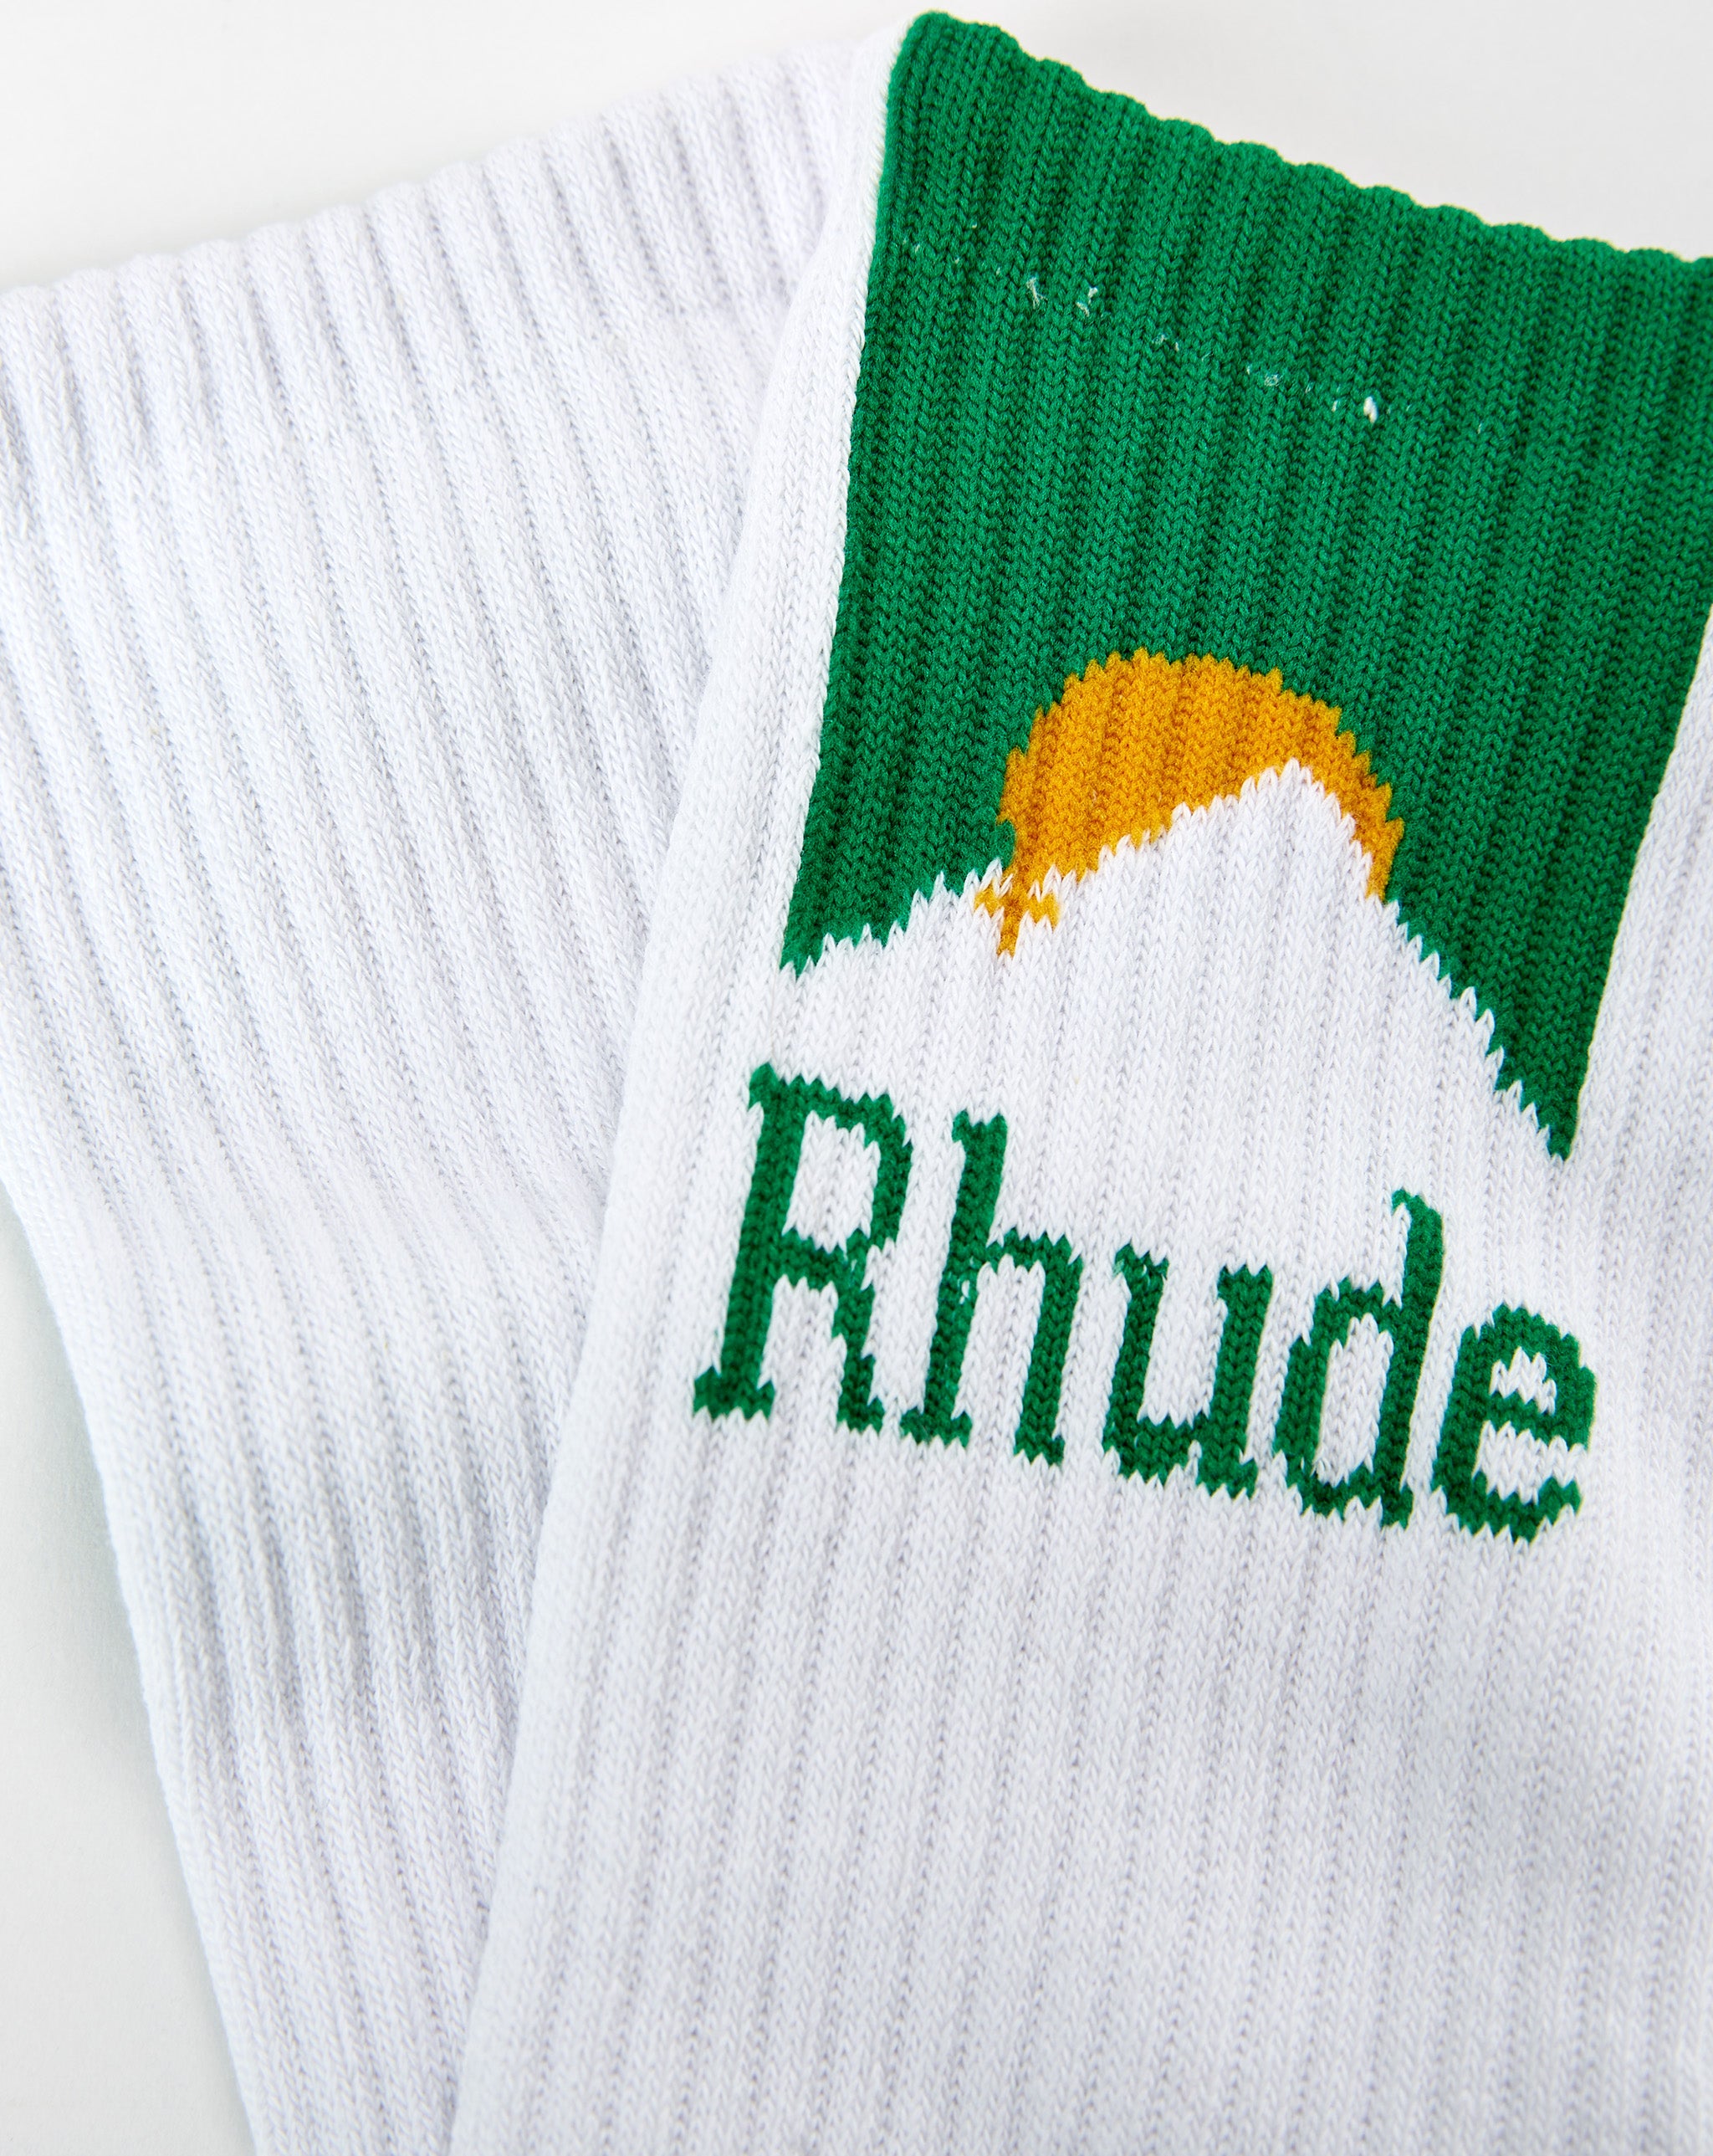 Rhude Rhude Moonlight Sock  - Cheap 127-0 Jordan outlet